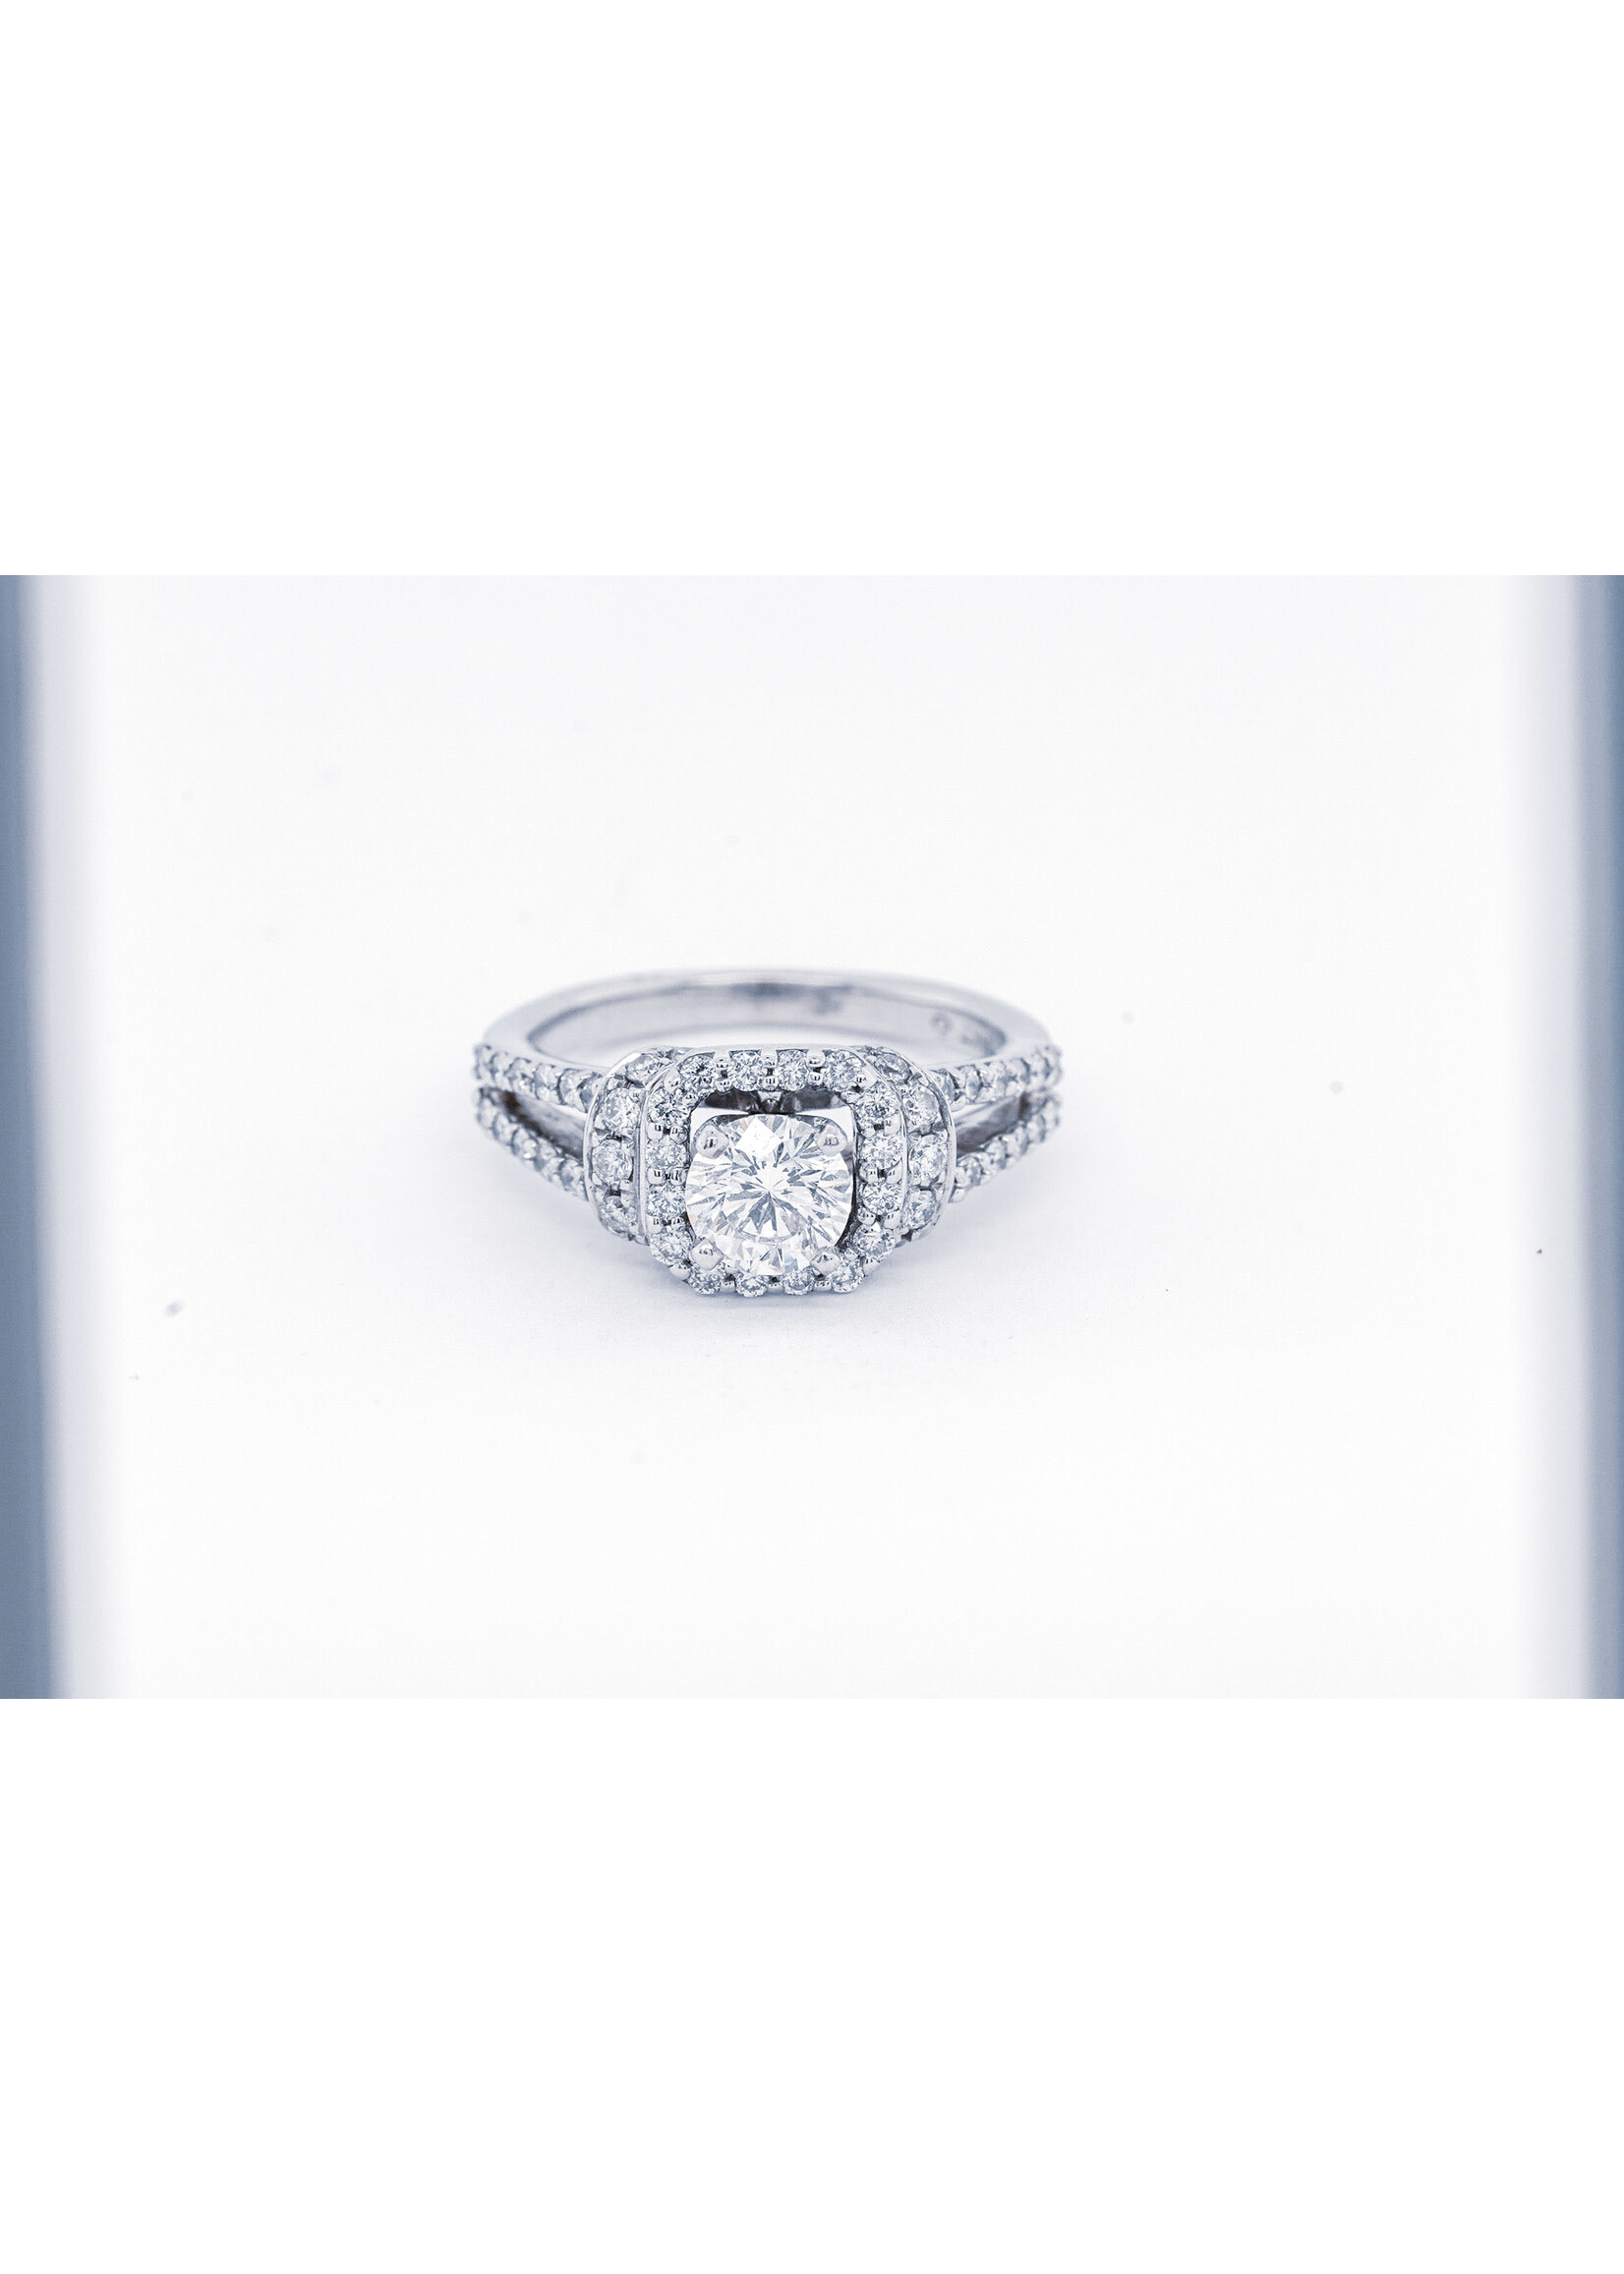 14KW 4.45g 1.40TW (.64ctr) H/SI1 Round Leo Diamond Halo Engagement Ring (size 5)